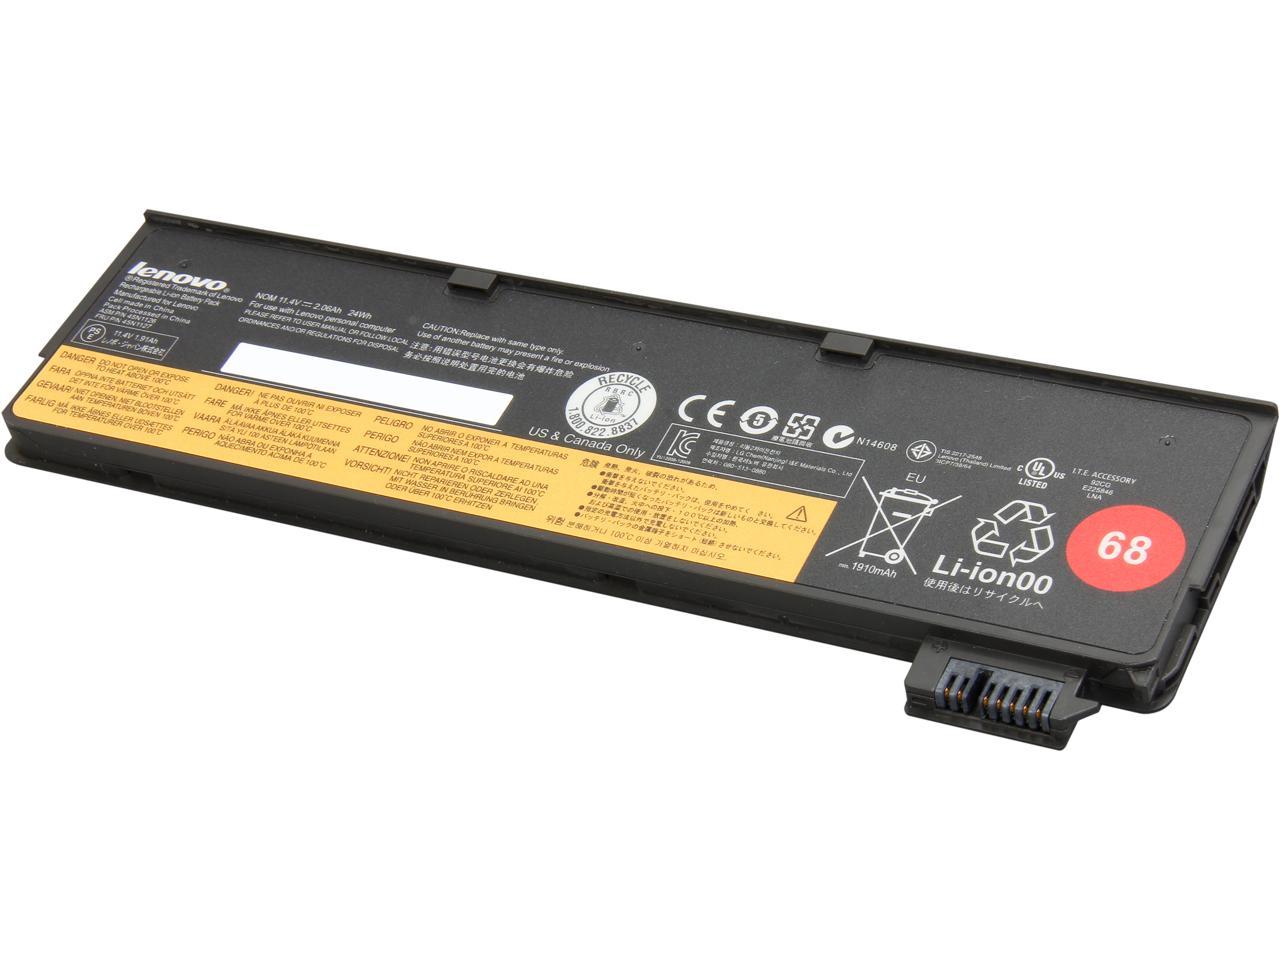 Lenovo ThinkPad Battery 68 (3 Cell) 23.5Wh, 11.4v, 0.40 lb., 0C52861